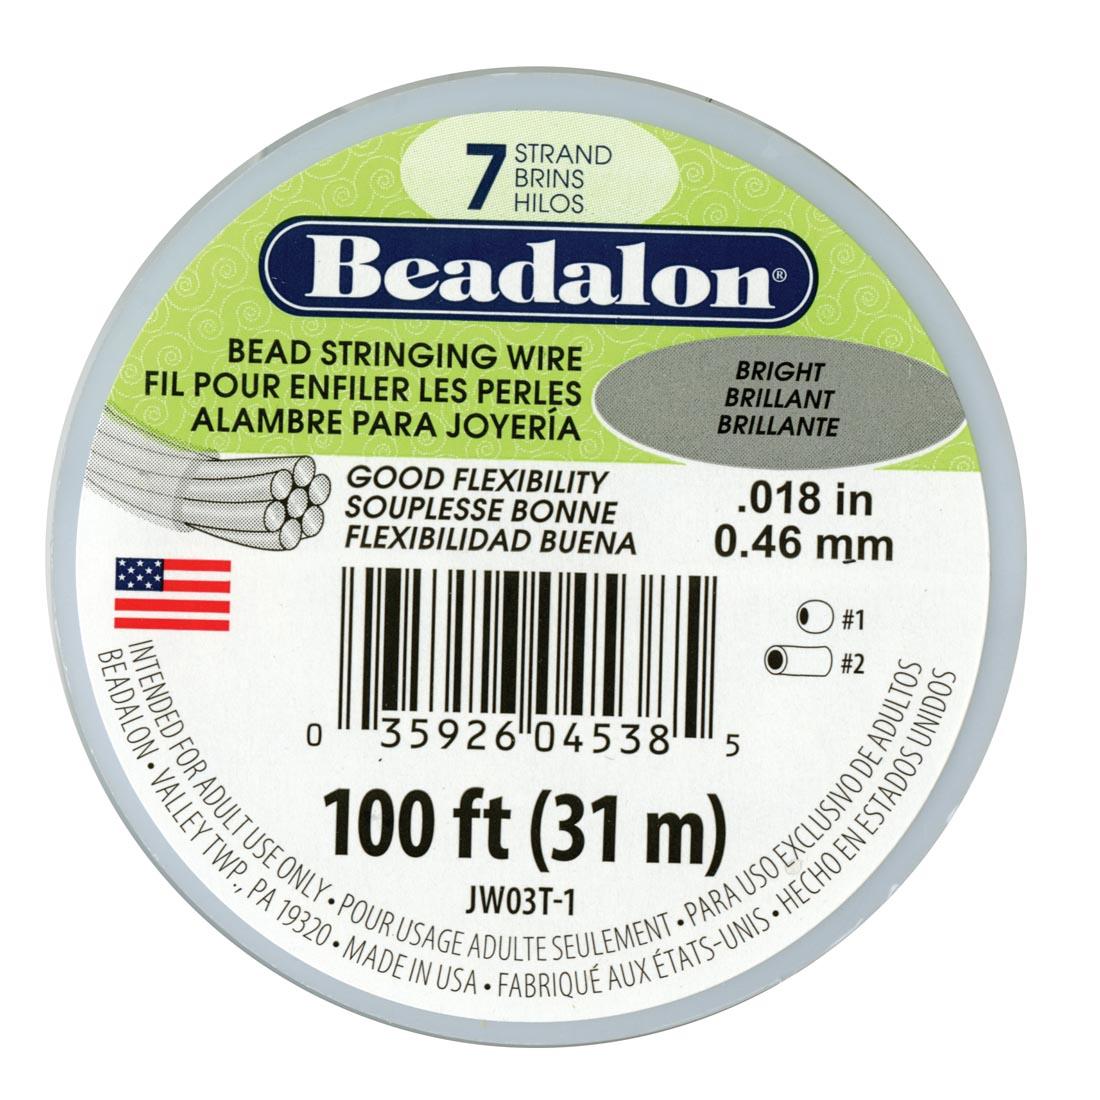 Beadalon Bead Stringing Wire